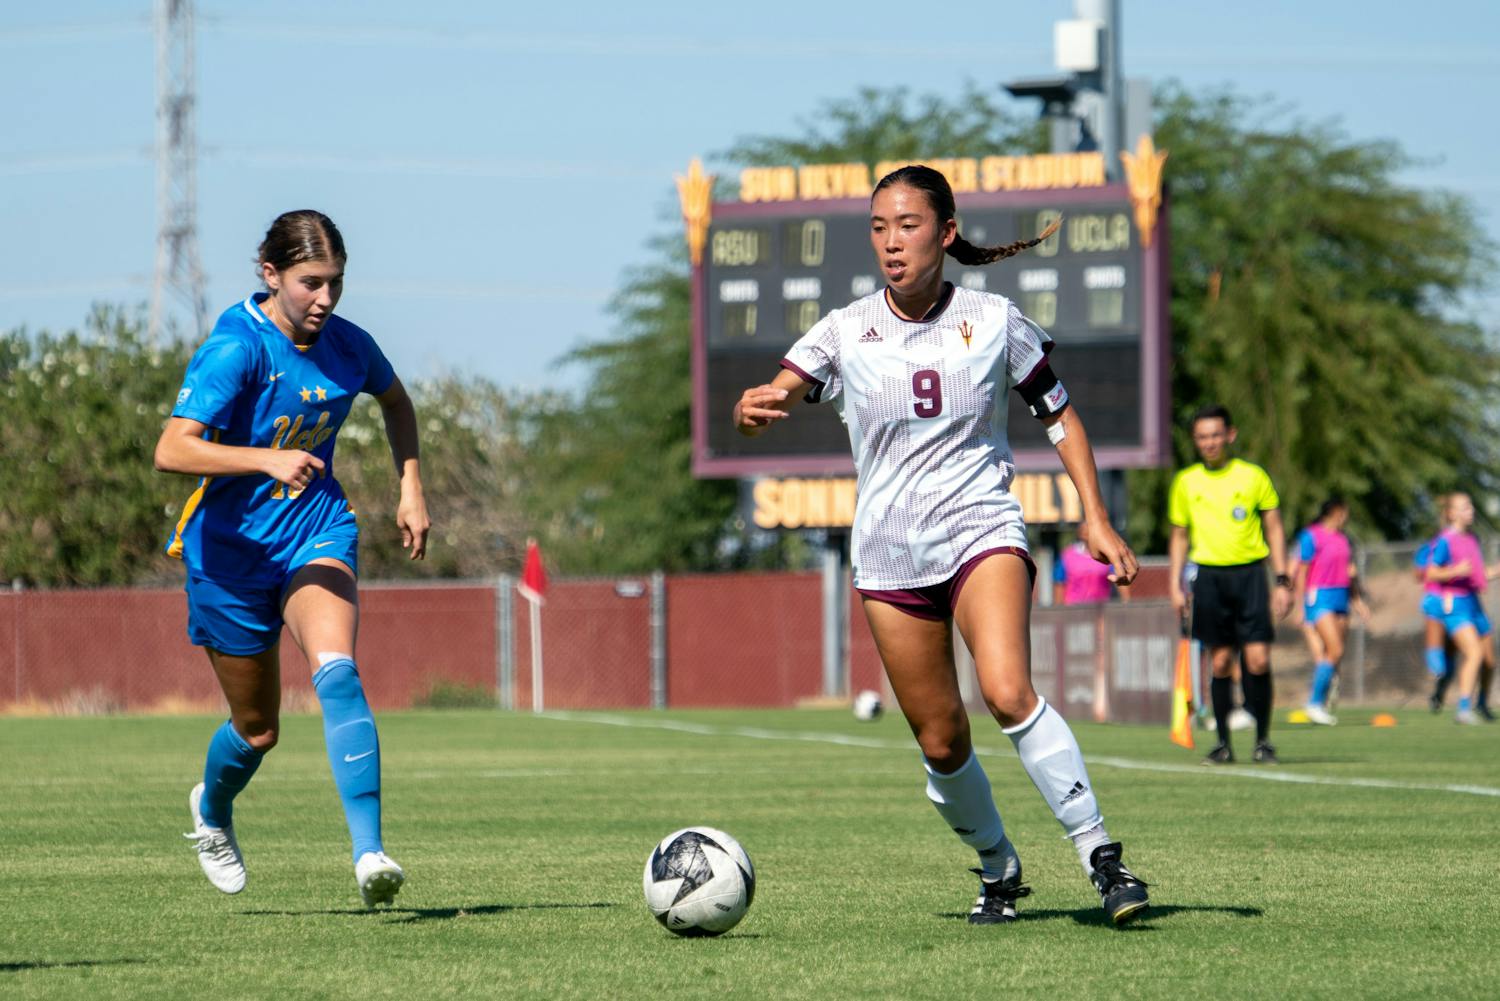 Club sports bring competition, community to ASU - The Arizona State Press